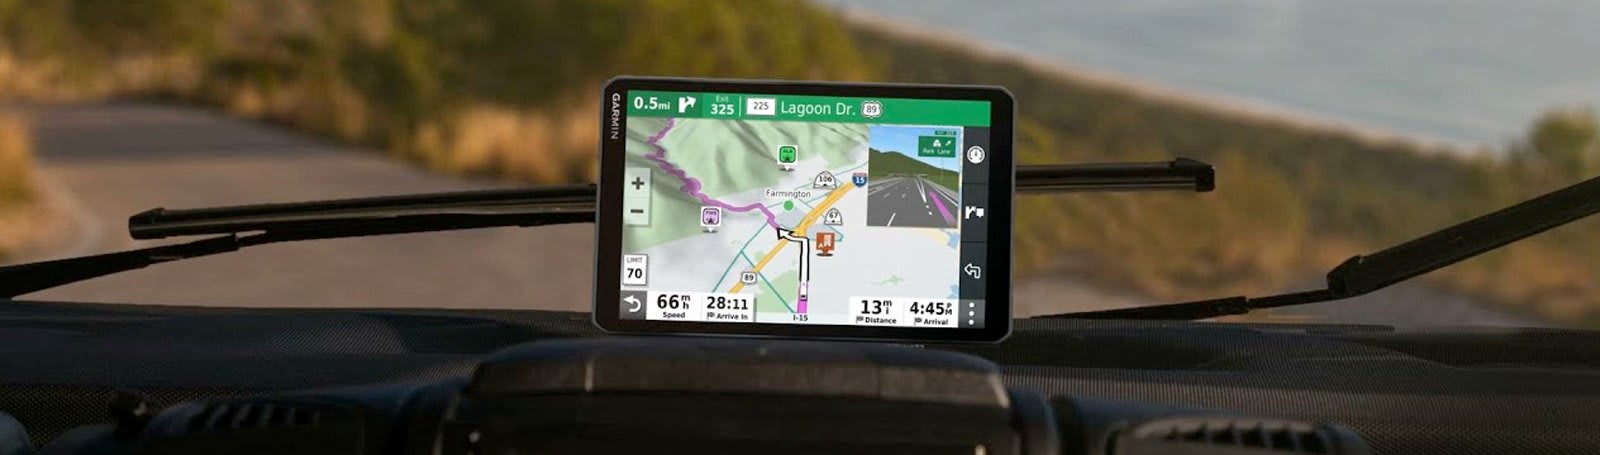 RV GPS 1090 Garmin RV Navigator |